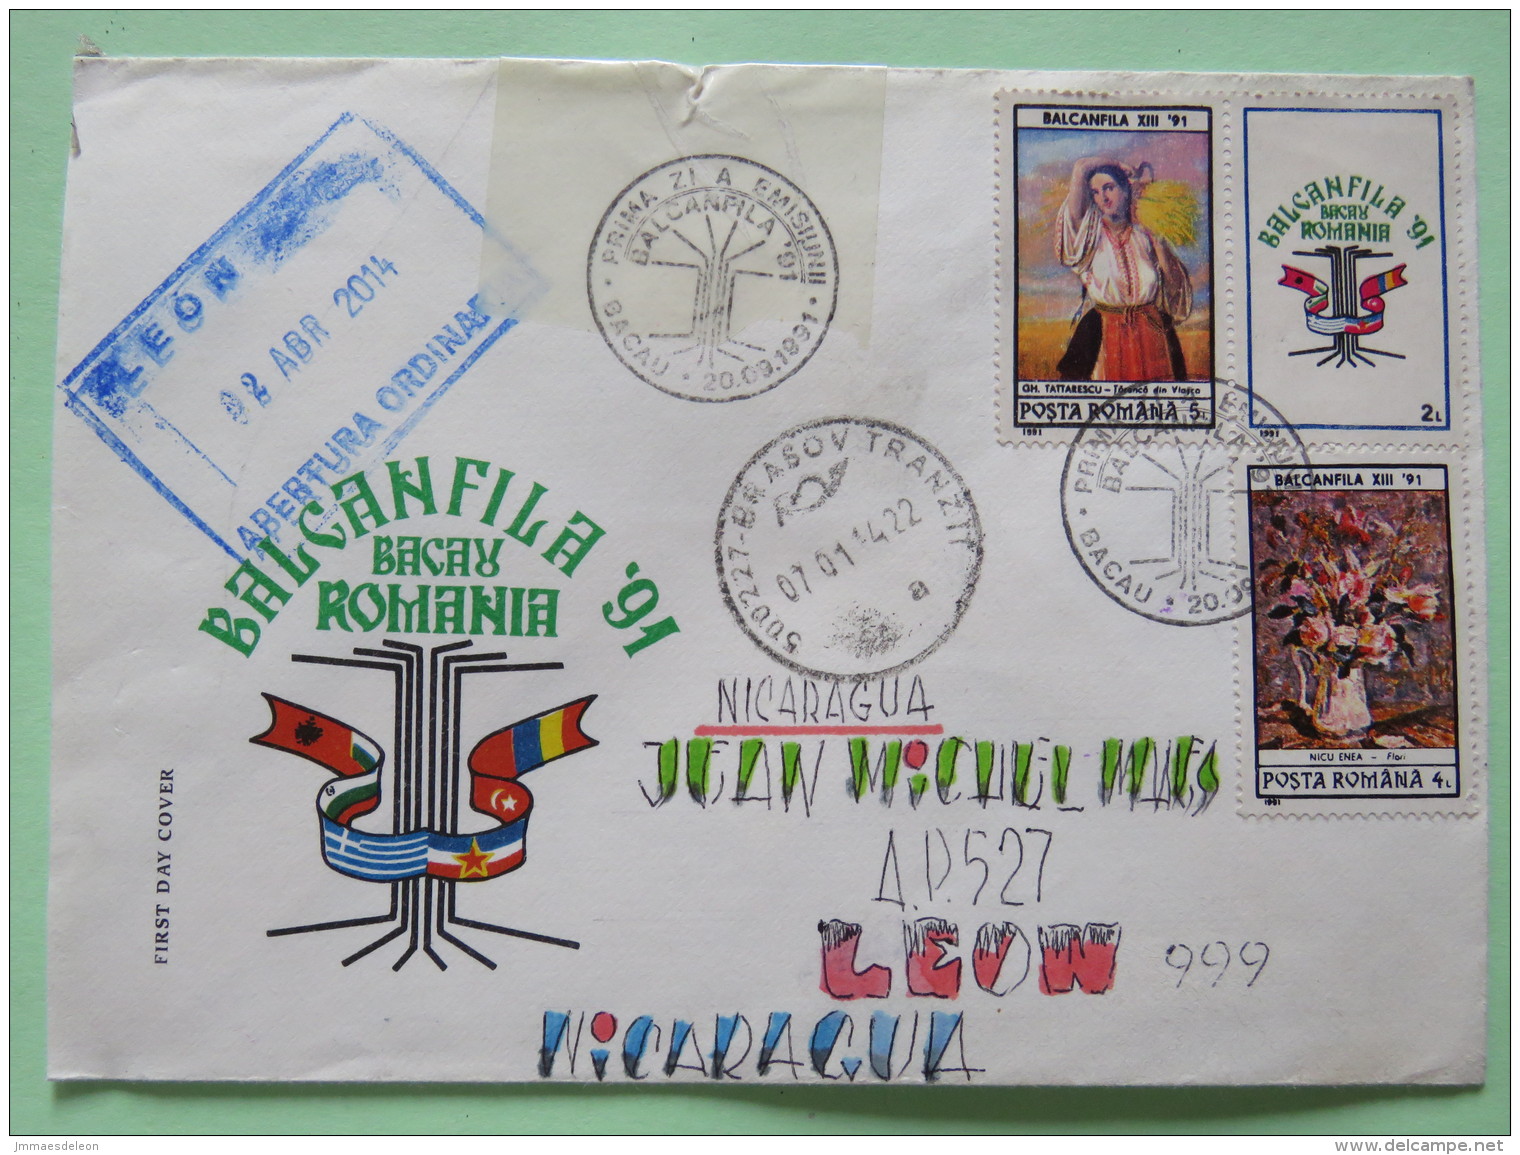 Romania 2014 FDC Cover Bacau (1991) Brasov To Nicaragua - BALCANFILA 91 + Label - Plant Flower On Back - Storia Postale